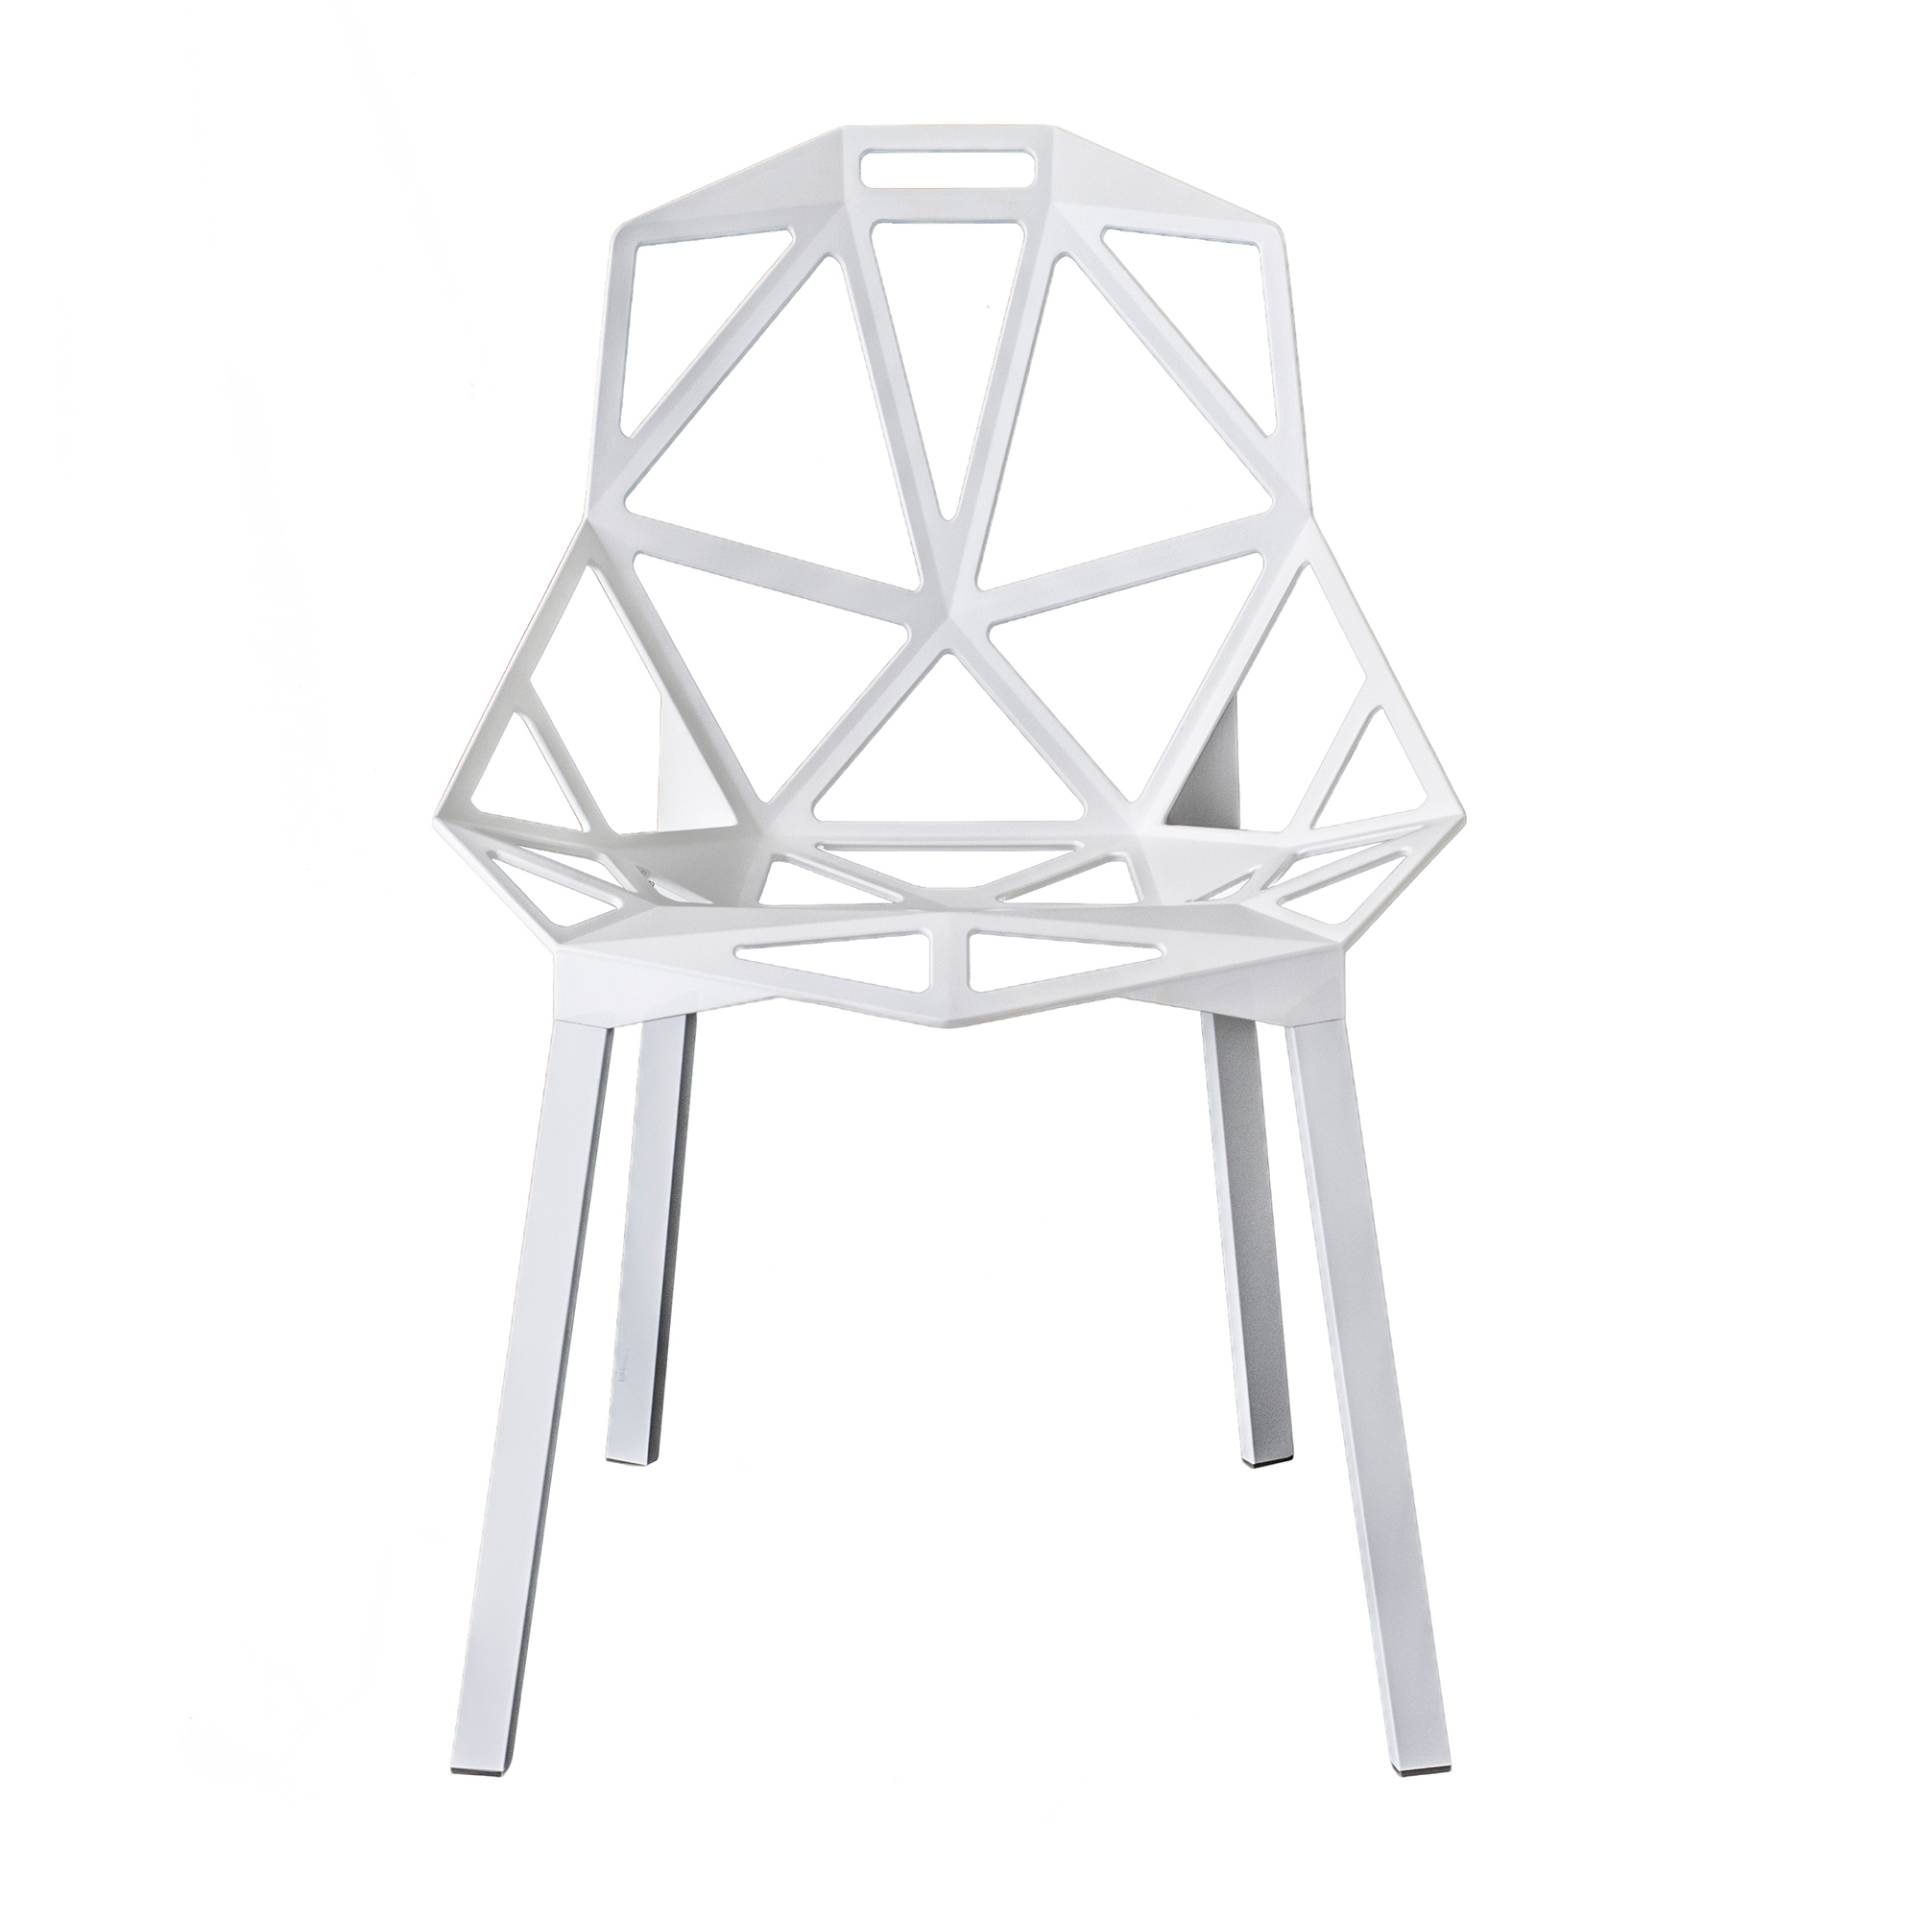 Magis - Chair One Stuhl stapelbar - weiß 5110/BxHxT 55x82x59cm/Titan und Polyester fluoriert lackiert/Gestell Profilaluminium lackiert von Magis